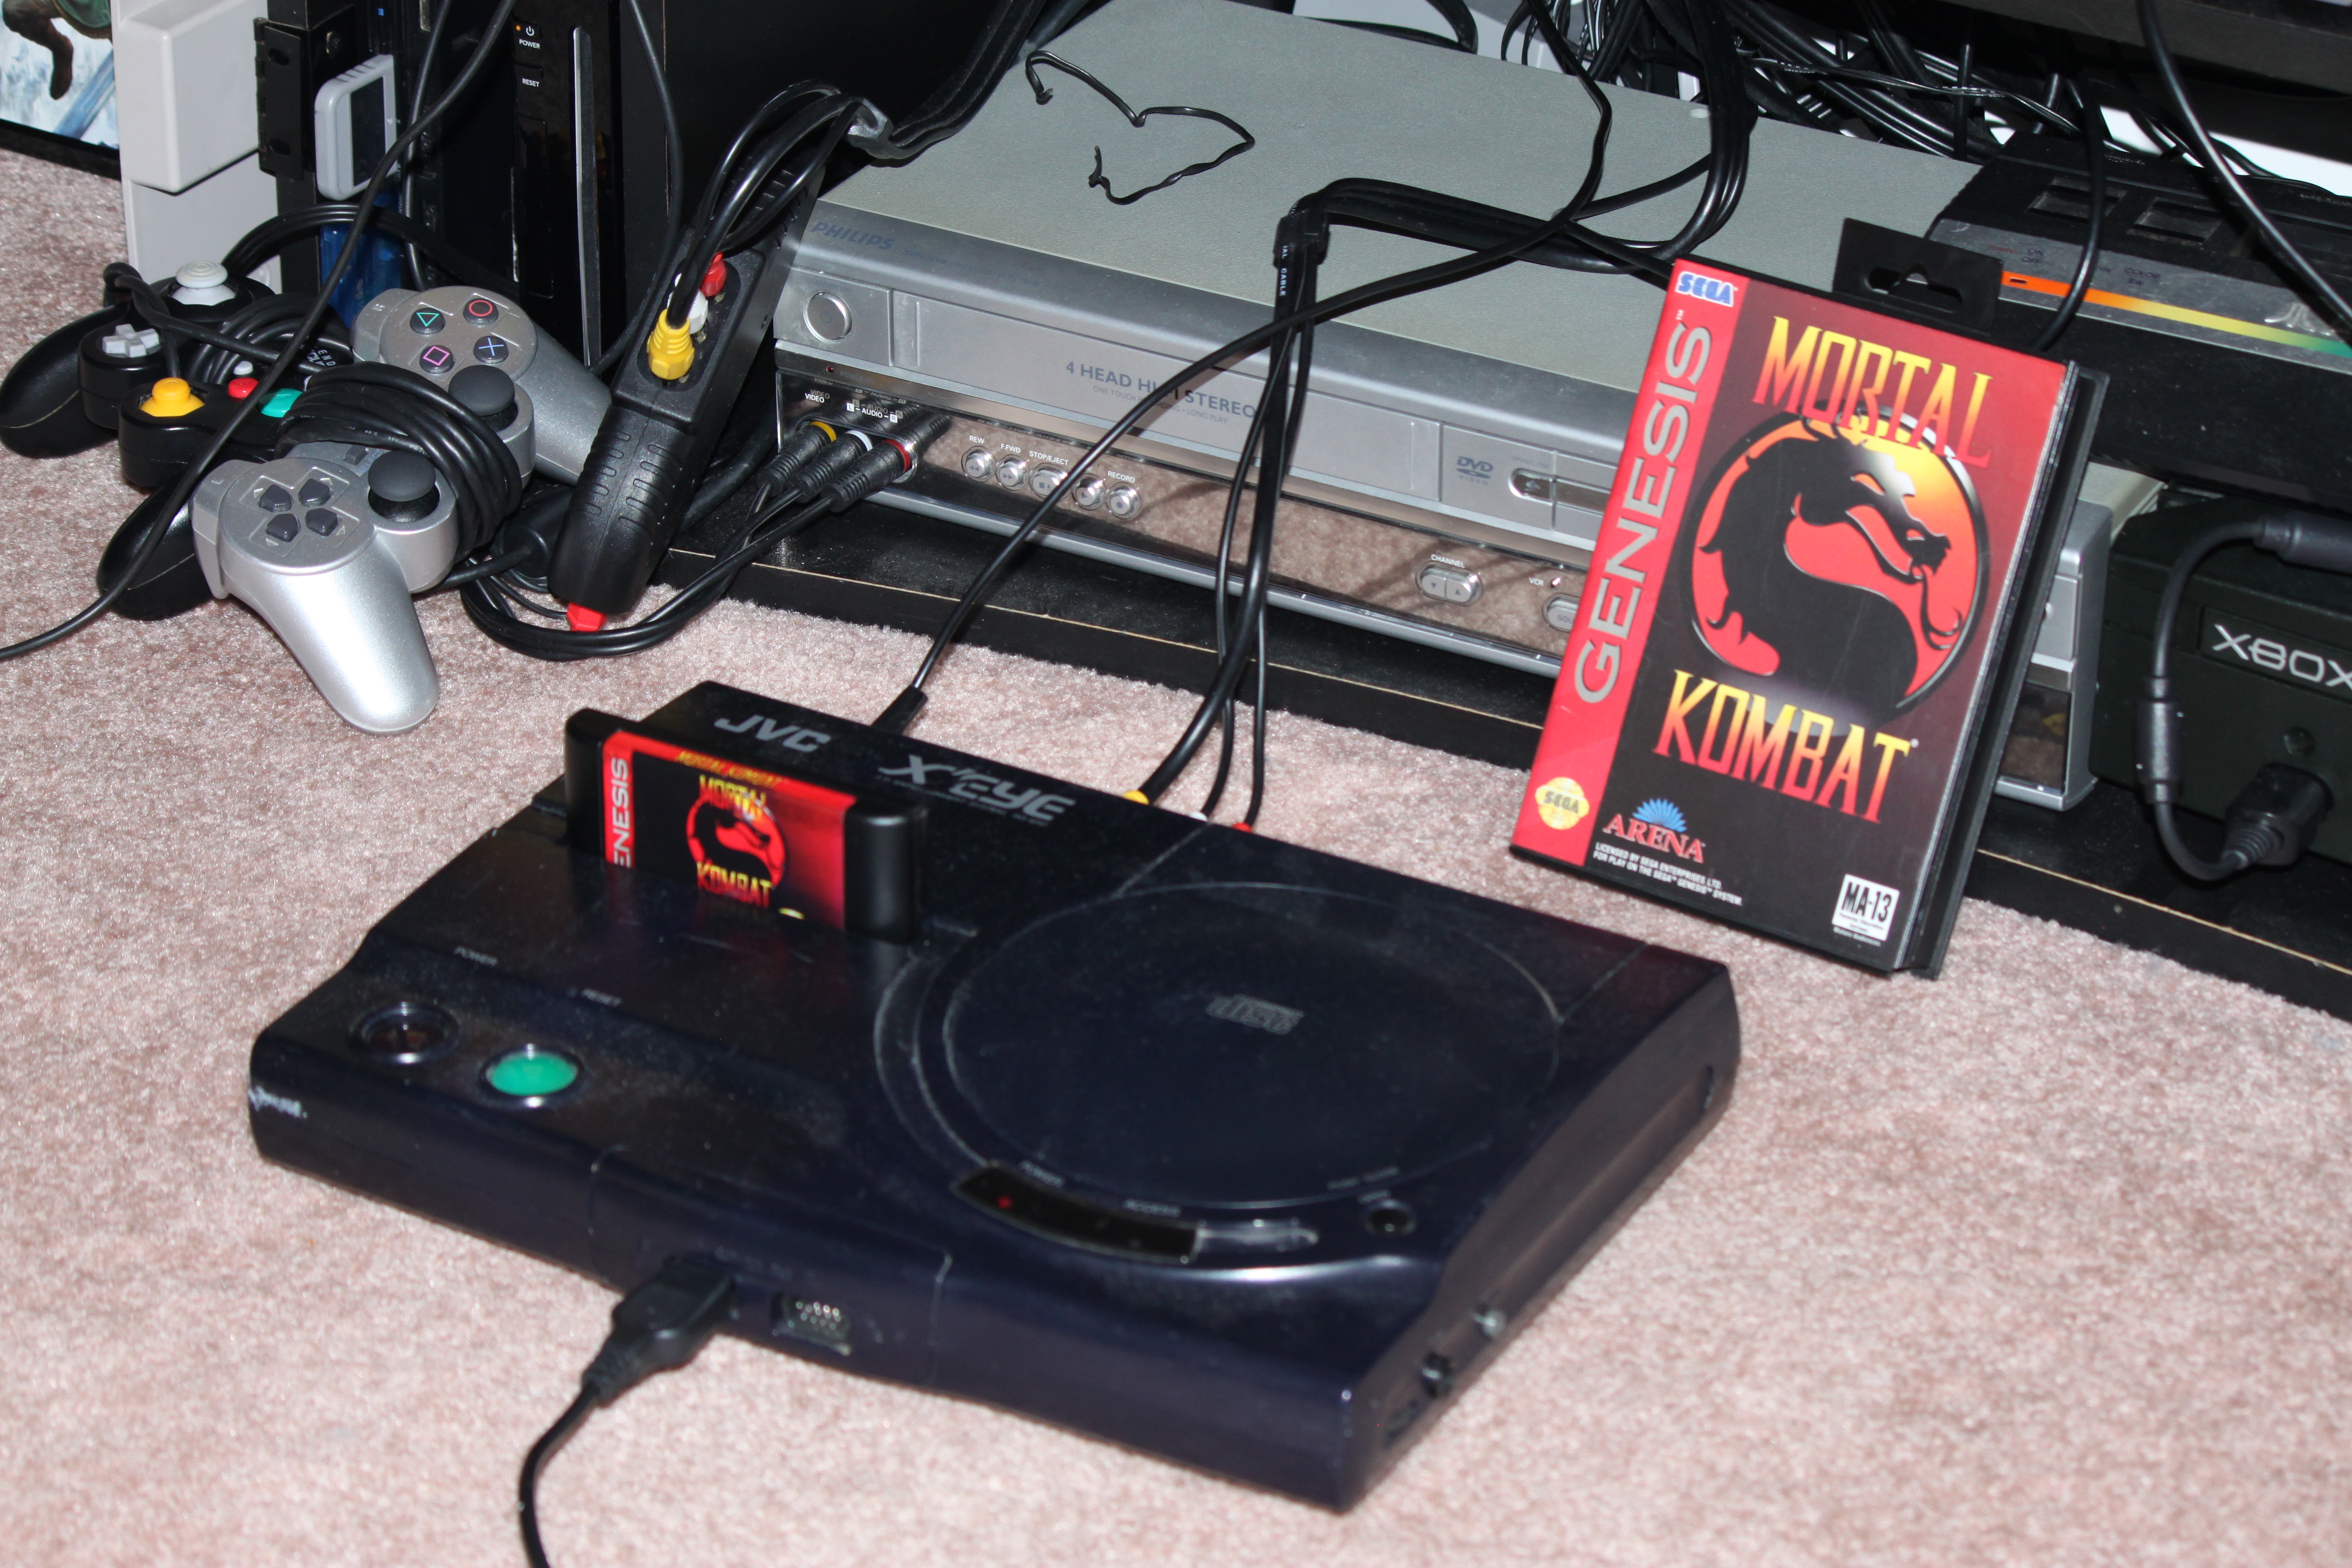 exosilver: Mortal Kombat [Normal] (Sega Genesis / MegaDrive) 3,064,500 points on 2016-11-11 13:08:38